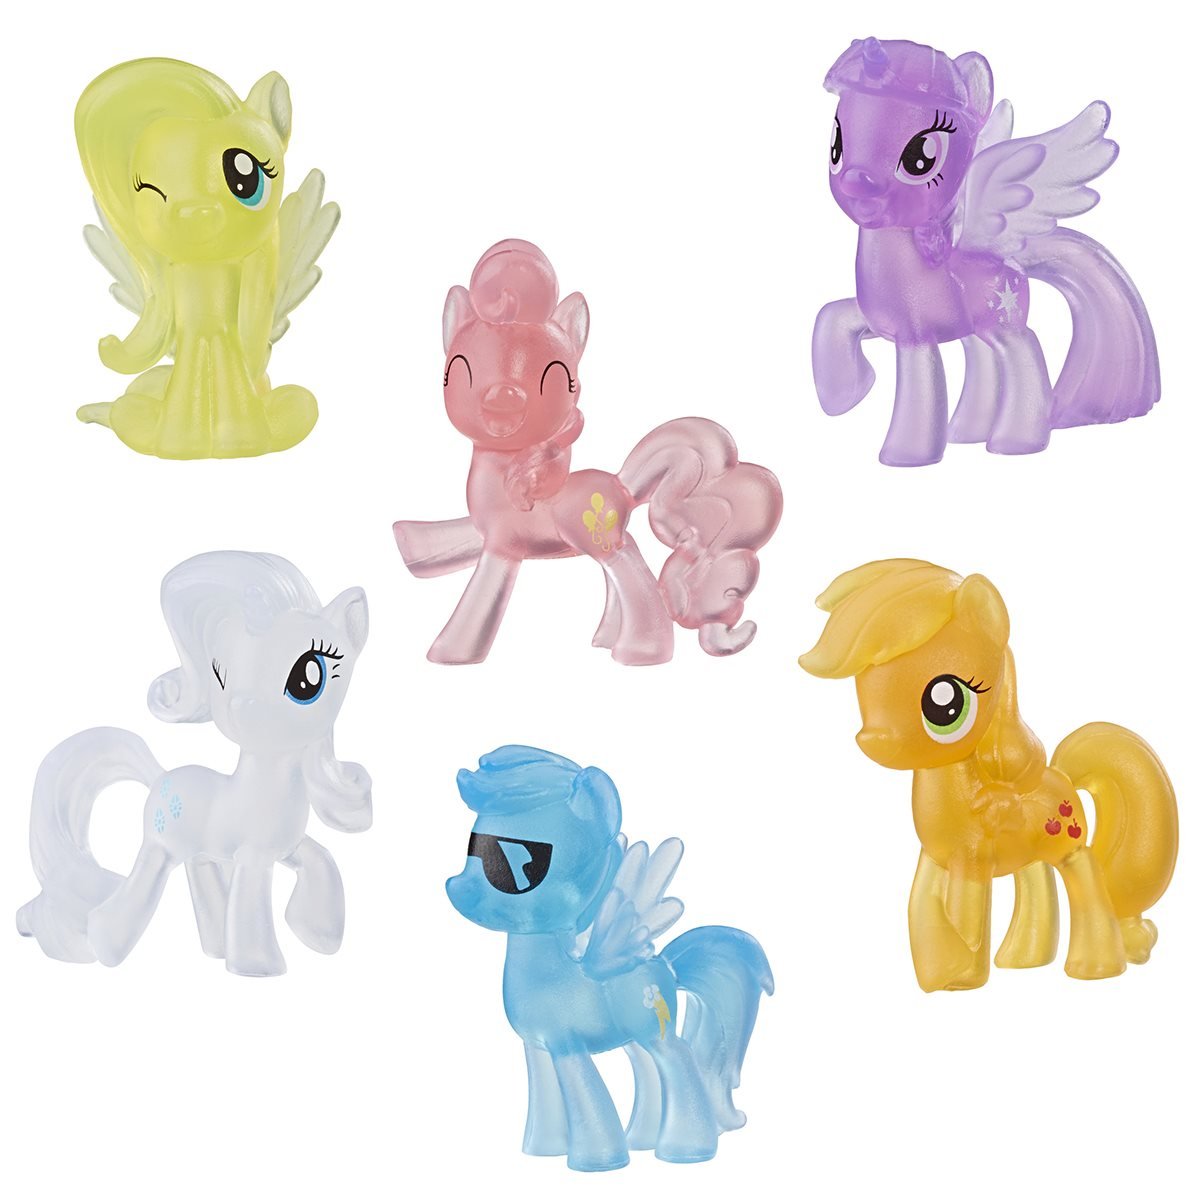 miniature my little pony figures